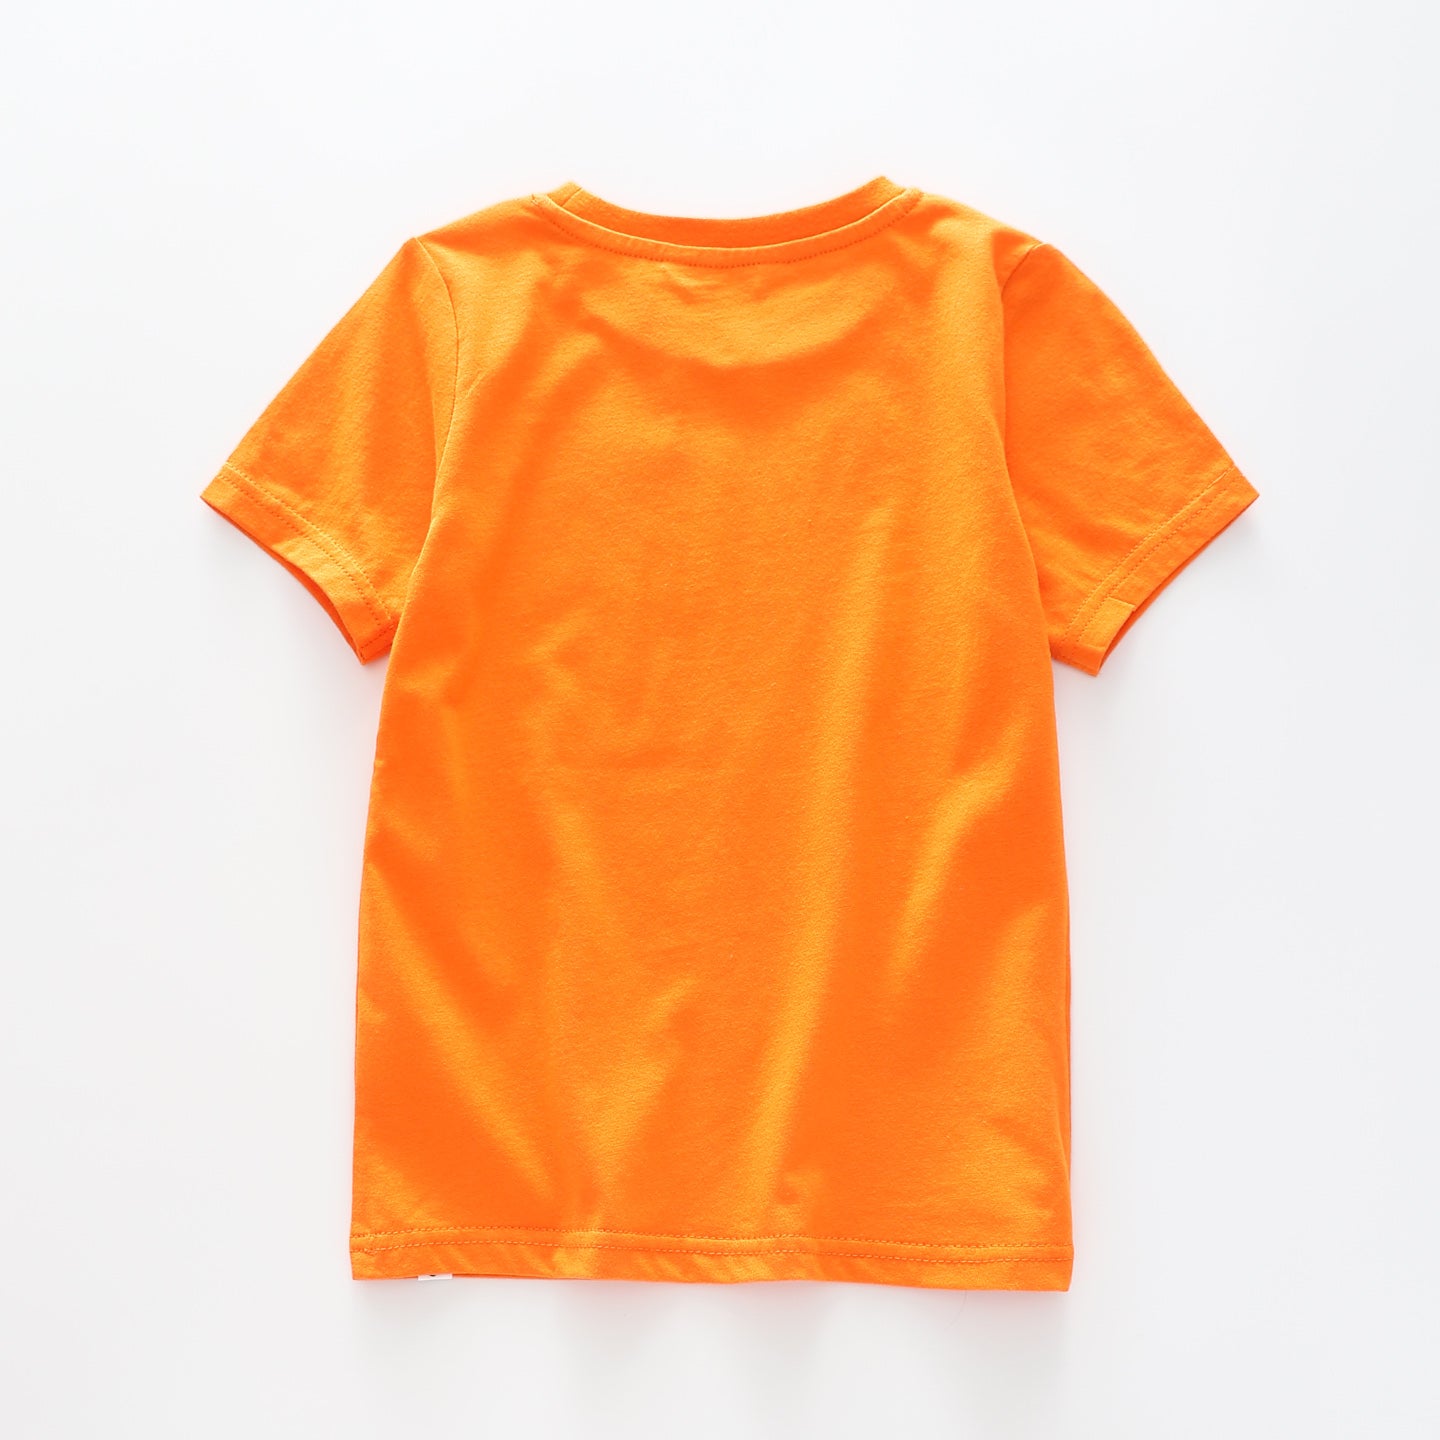 Orange Cotton Knit Tee